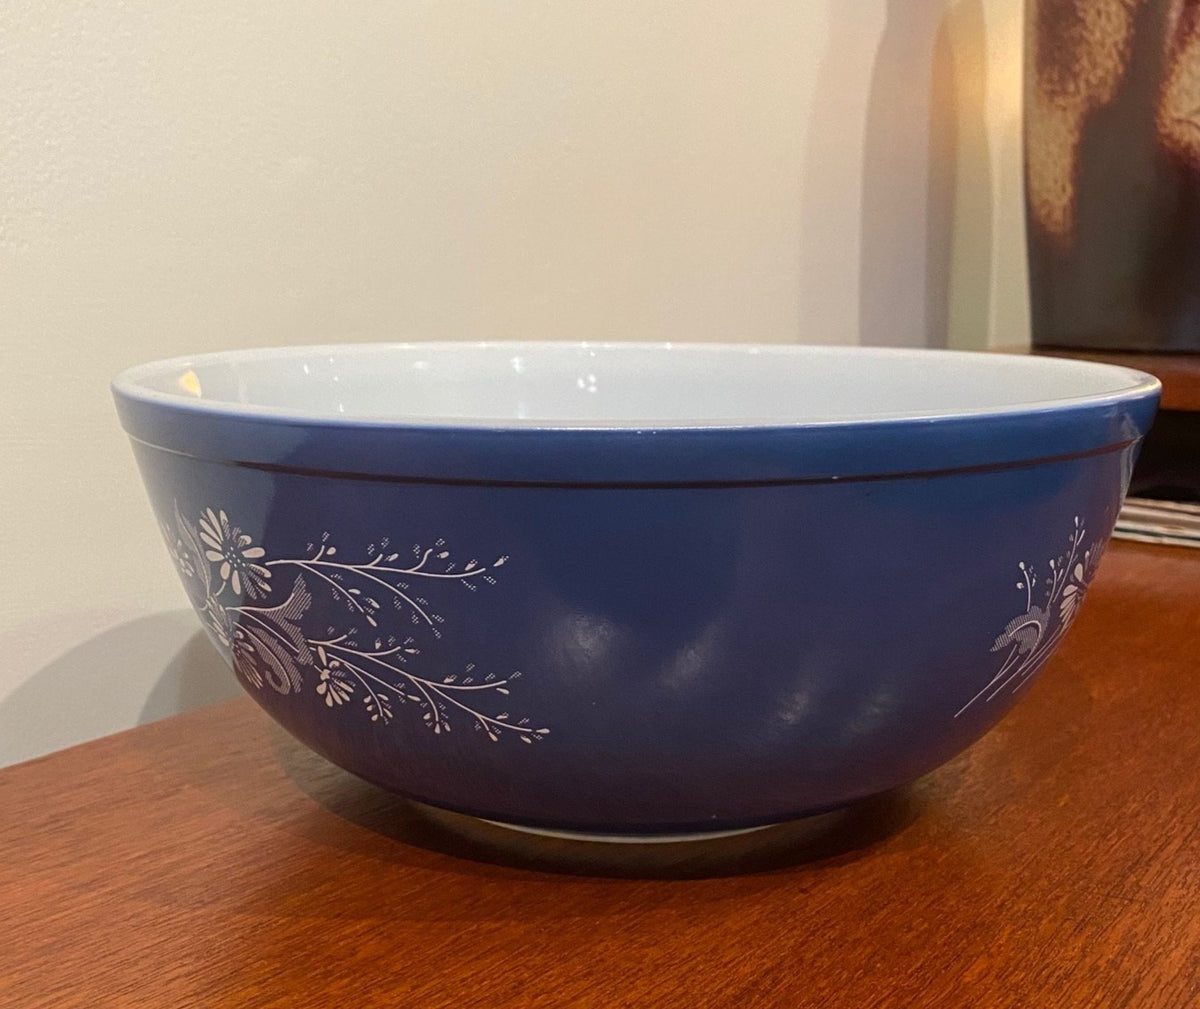 Vintage Pyrex Colonial Mist Mixing Bowls Rare All Blue Bowls 